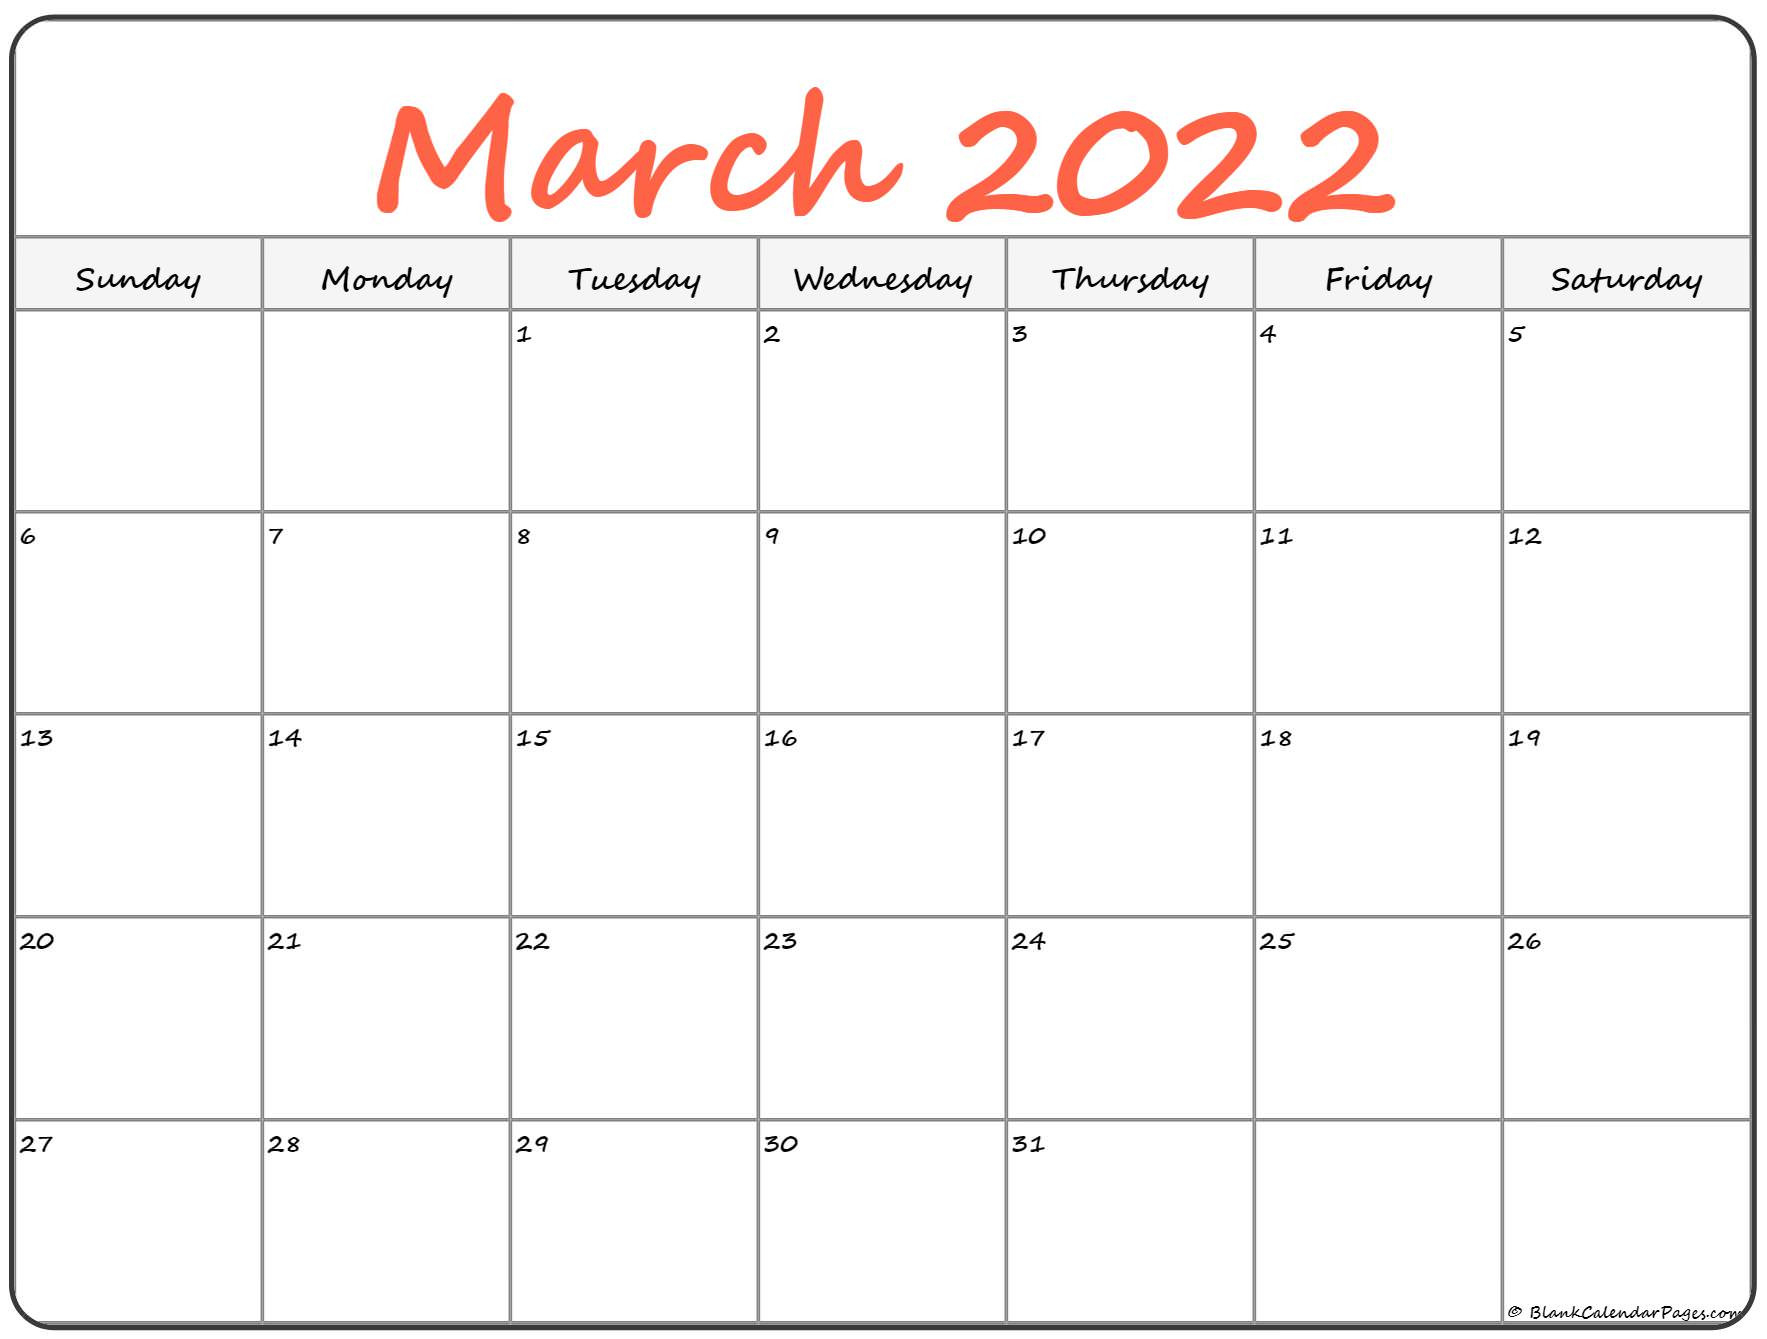 2022 Calendar Same As What Year - Nexta-School Calendar 2022 In Kenya